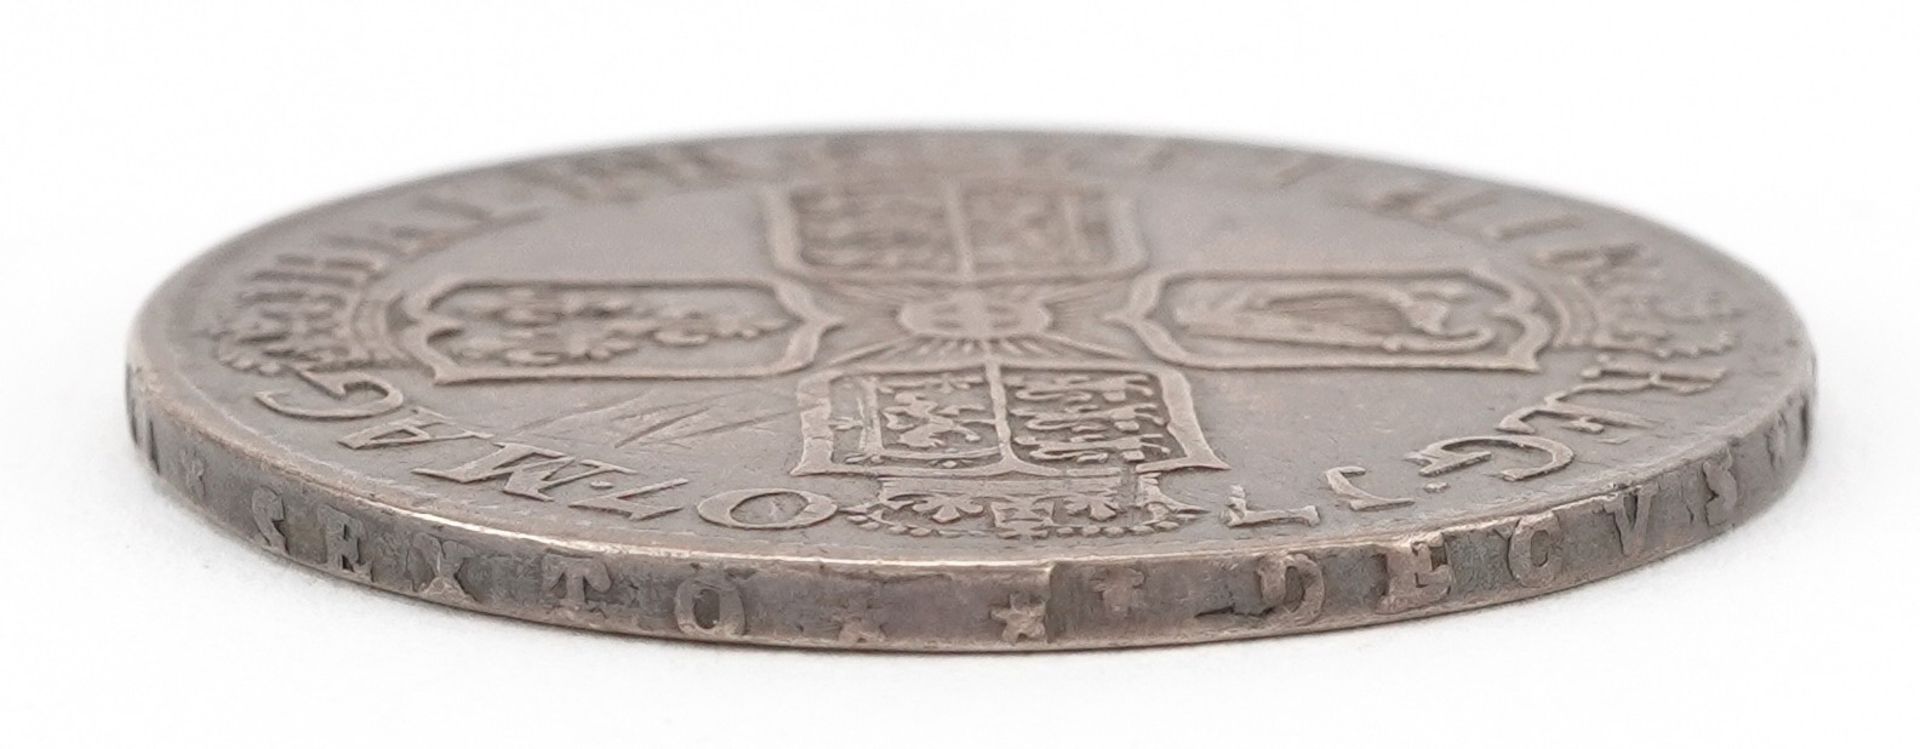 Queen Anne 1707 silver half crown - Image 3 of 3